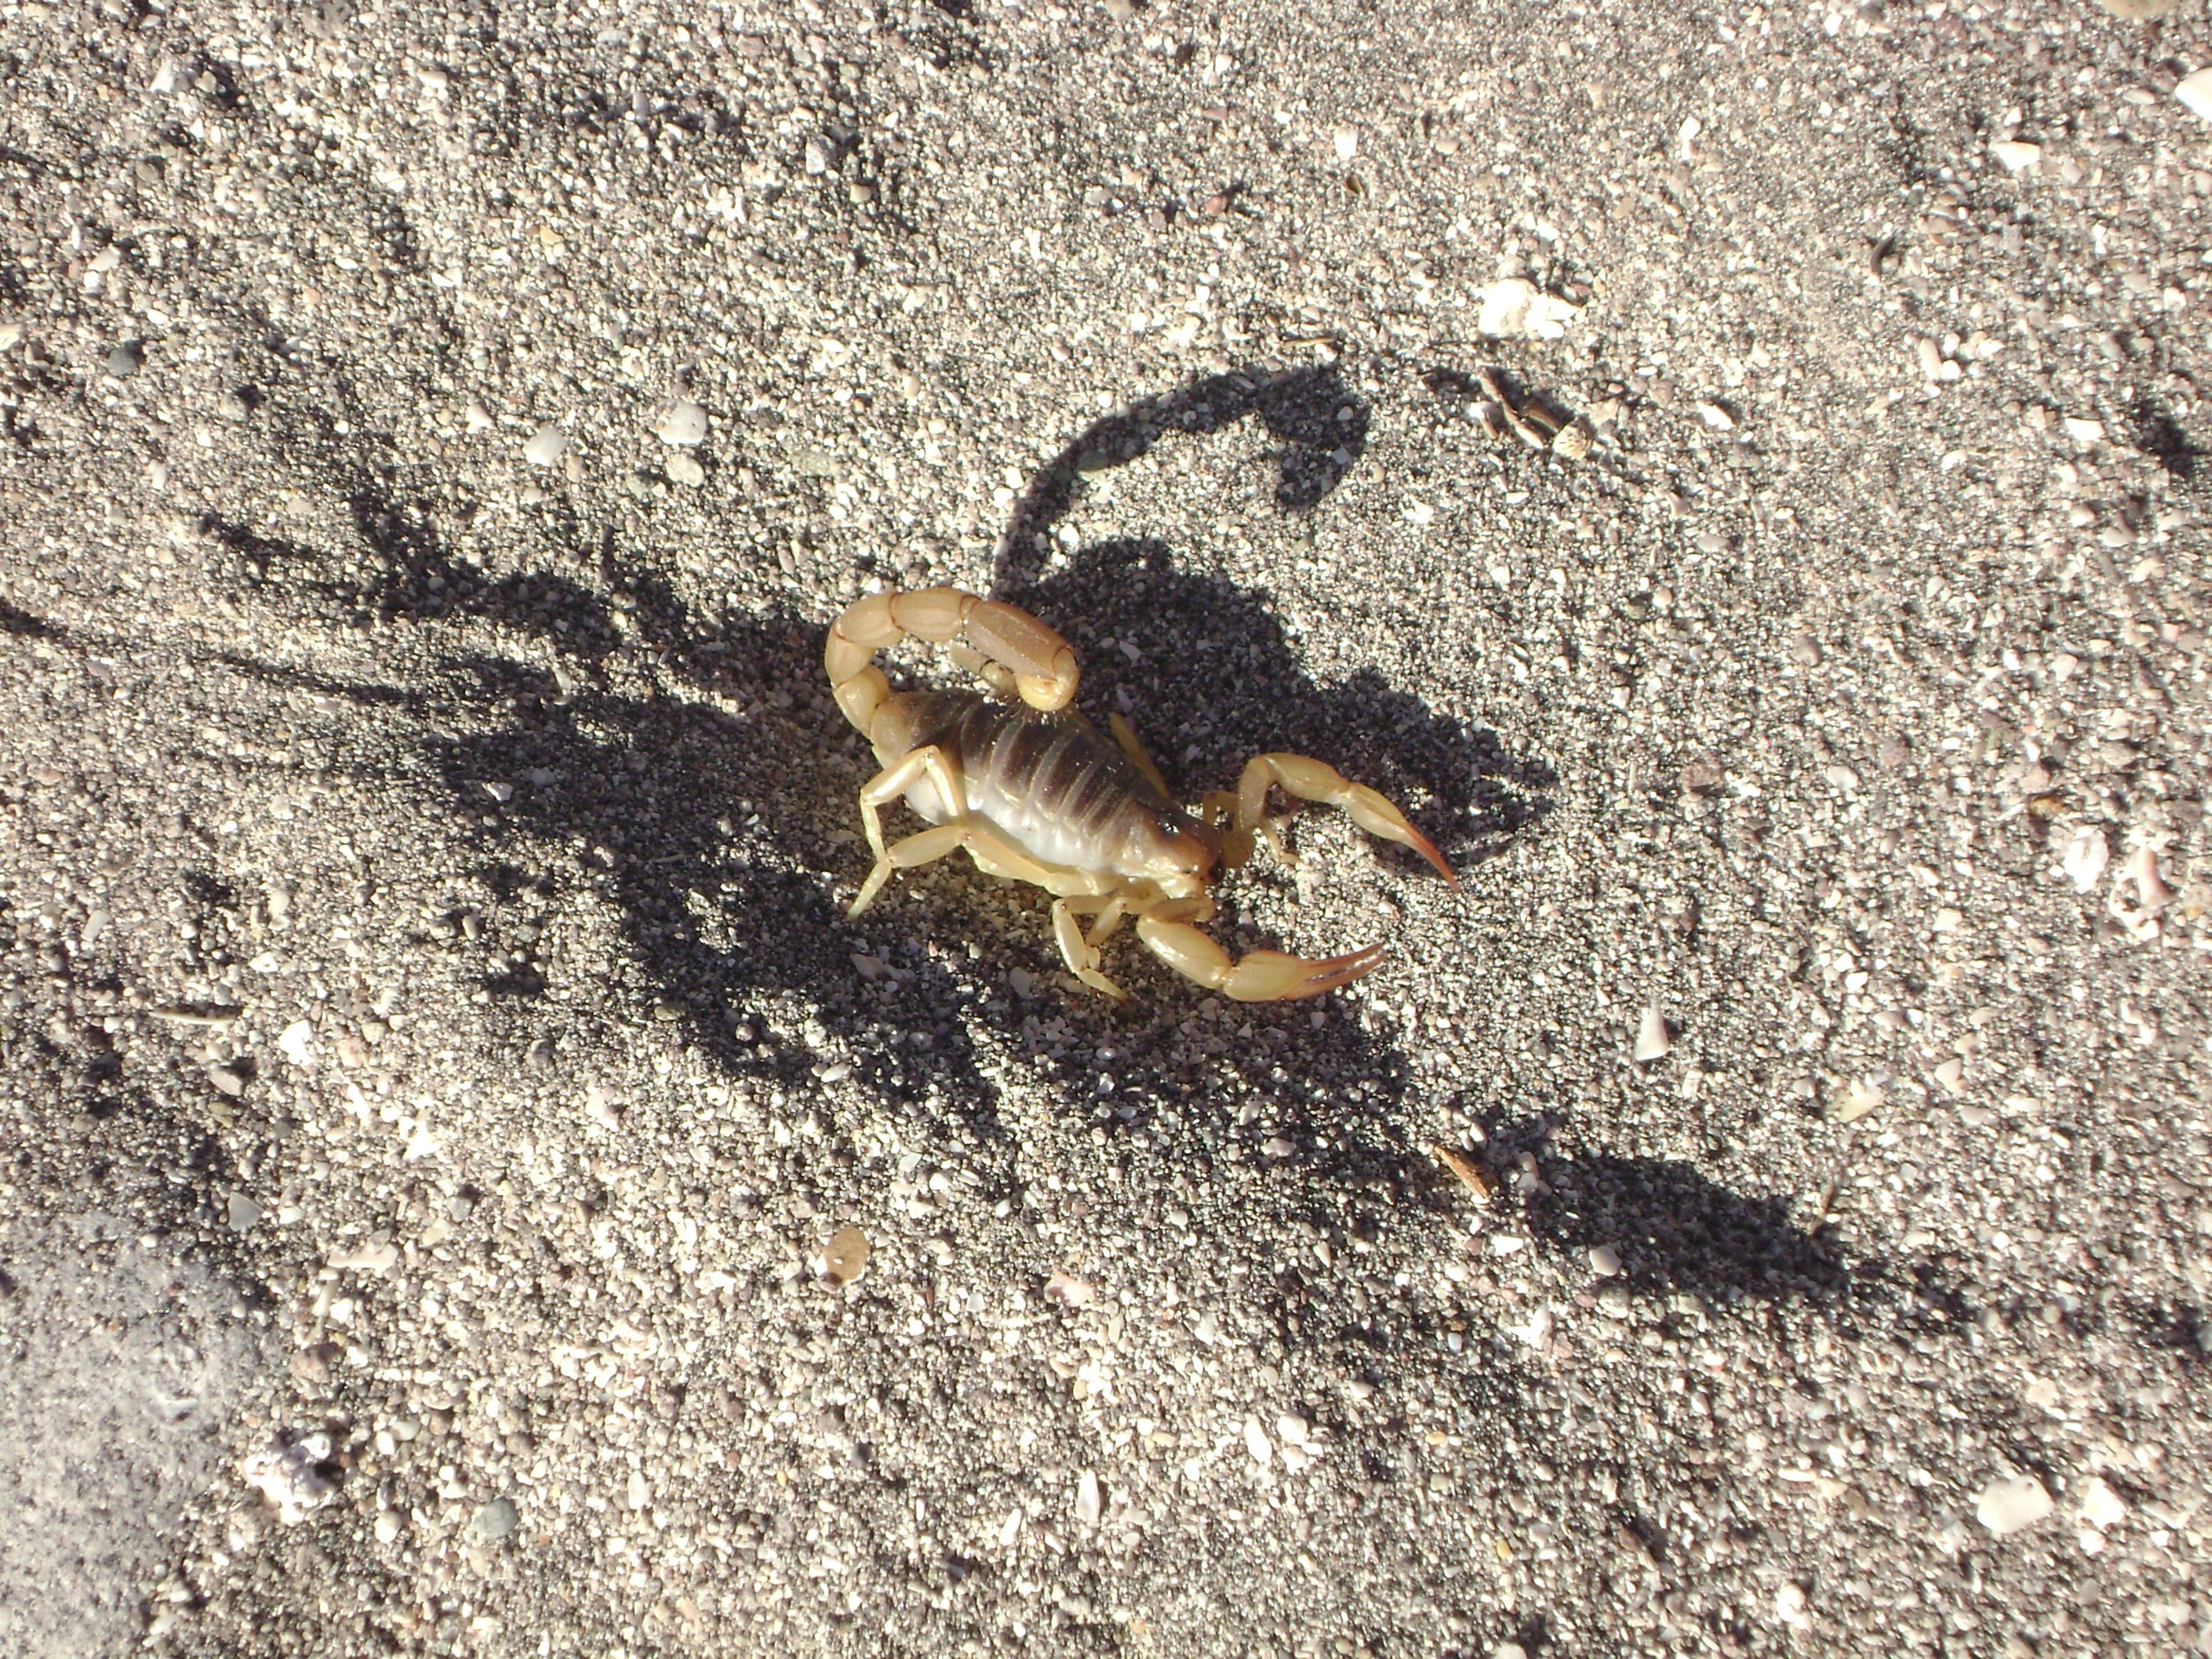 A scorpion on the beach at Danzante